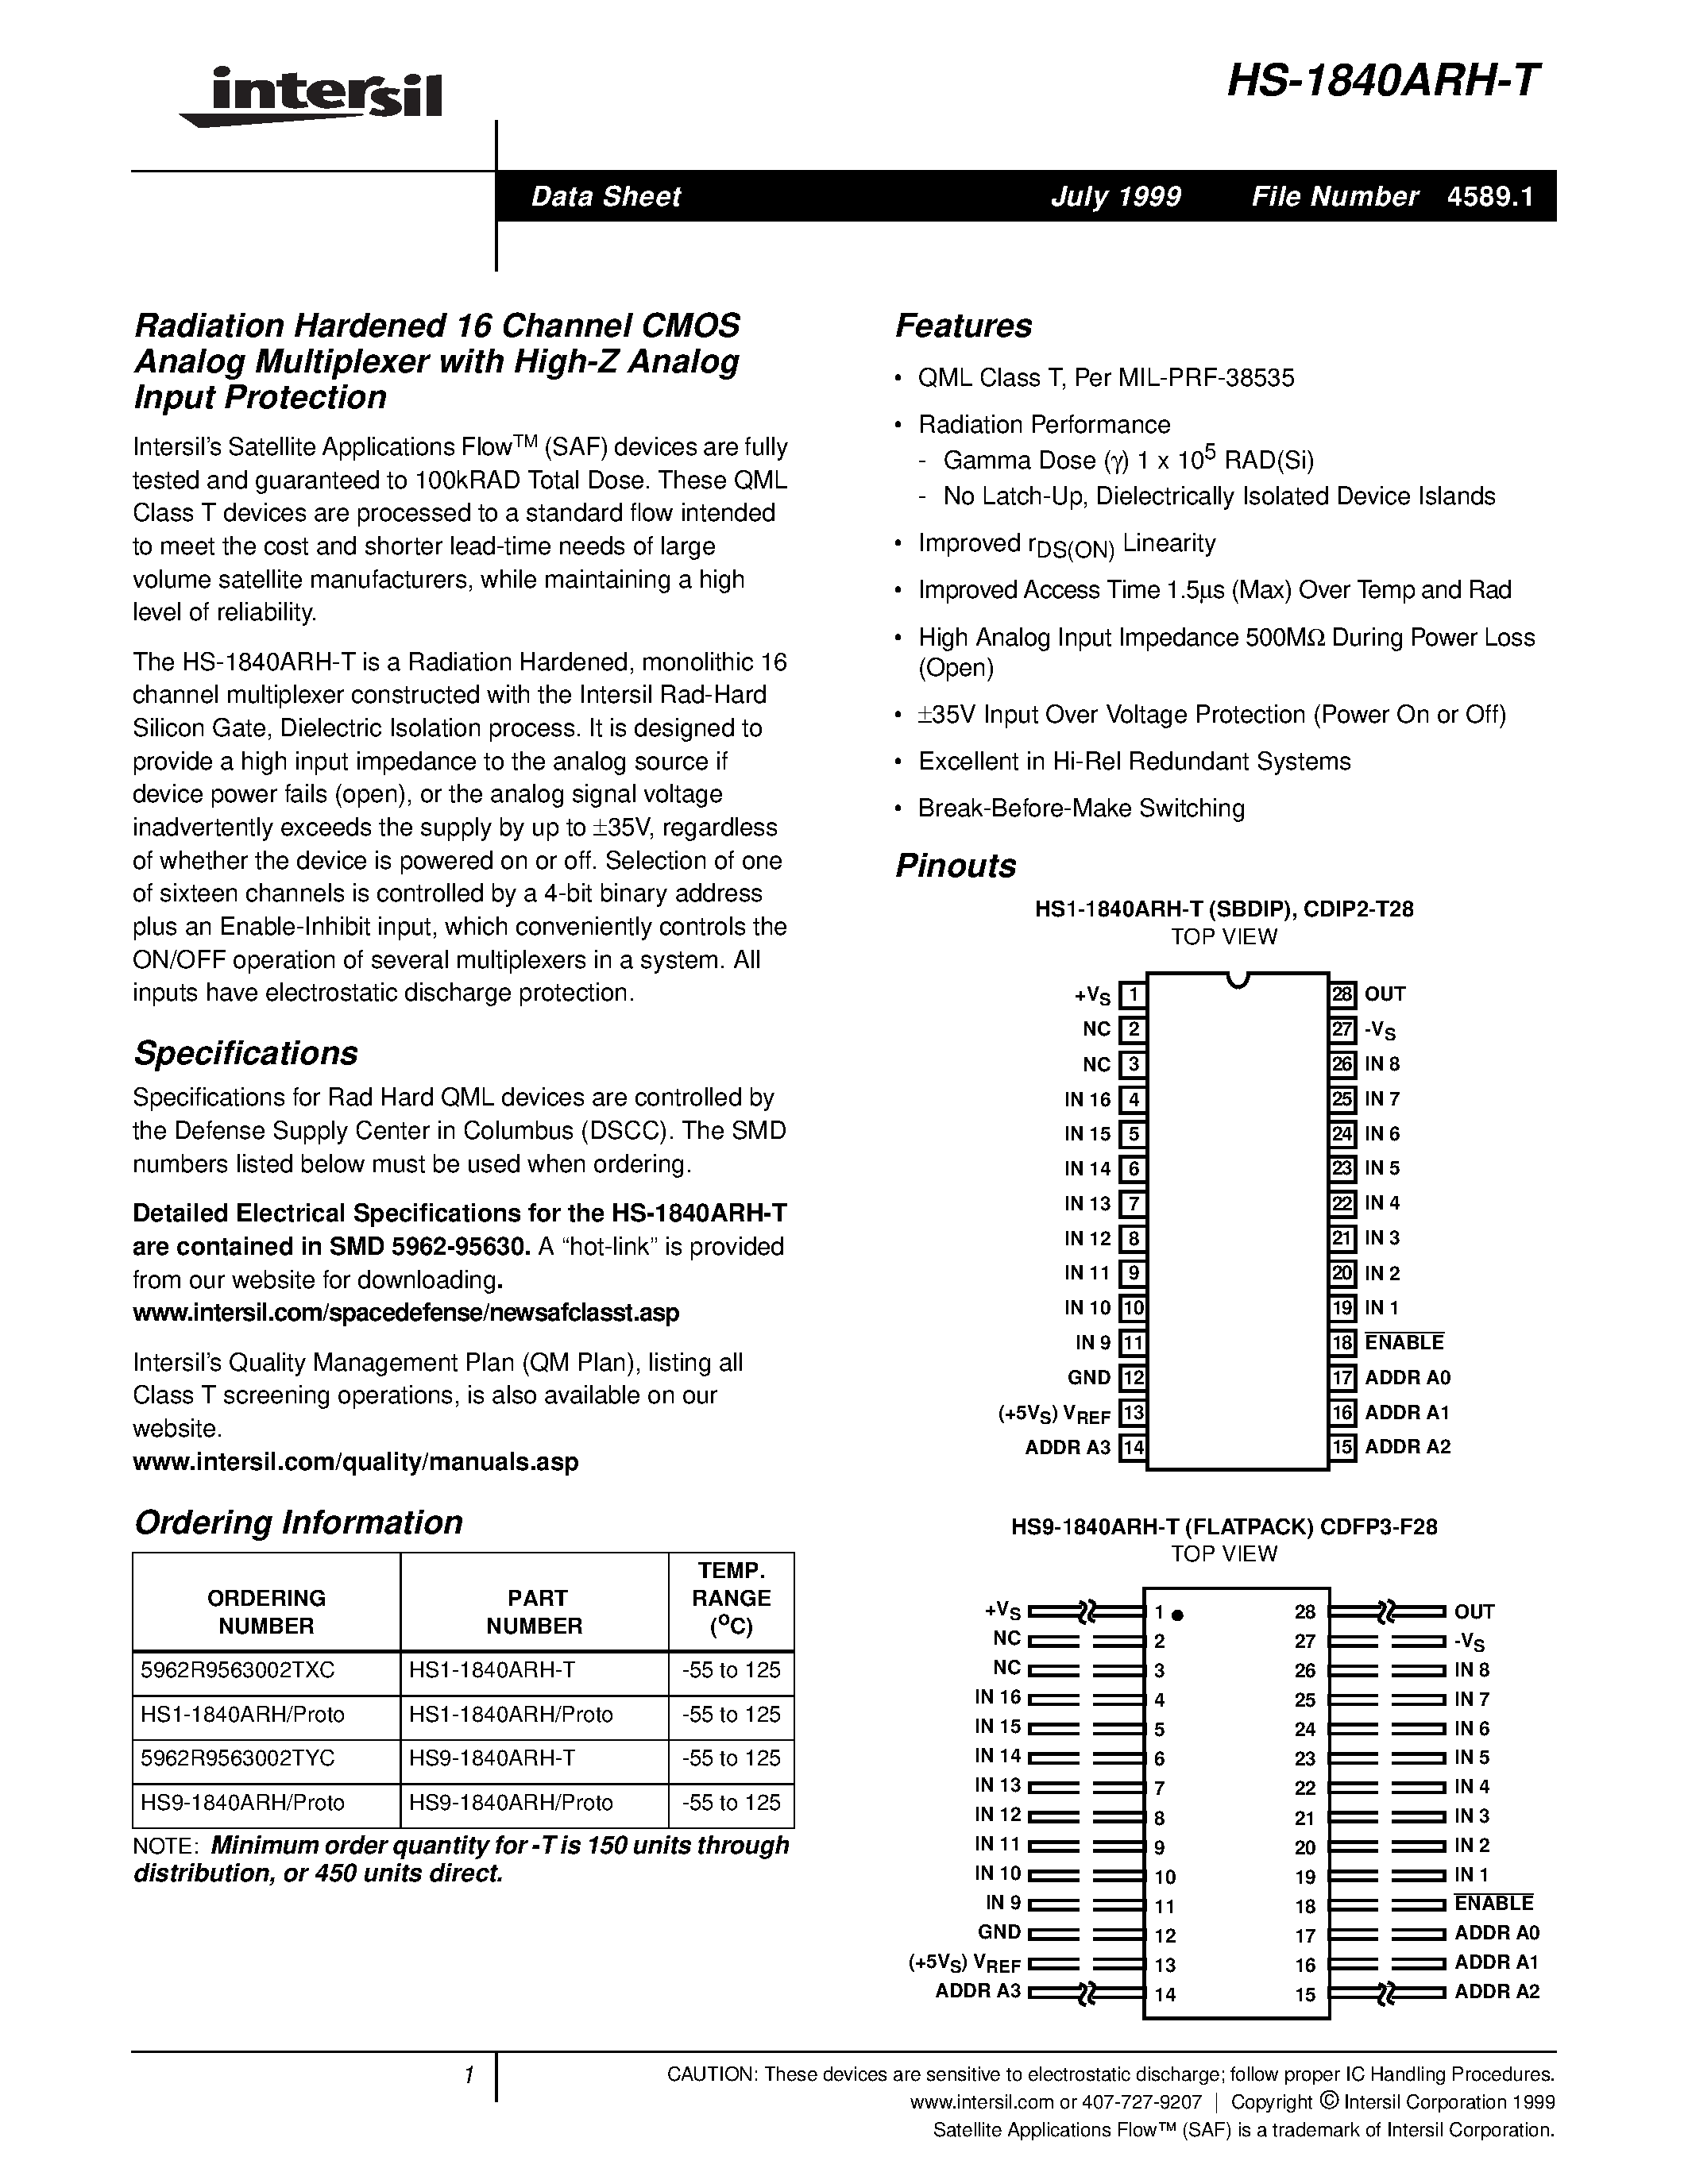 Даташит HS1-1840ARH - Rad-Hard 16 Channel CMOS Analog Multiplexer with High-Z Analog Input Protection страница 1